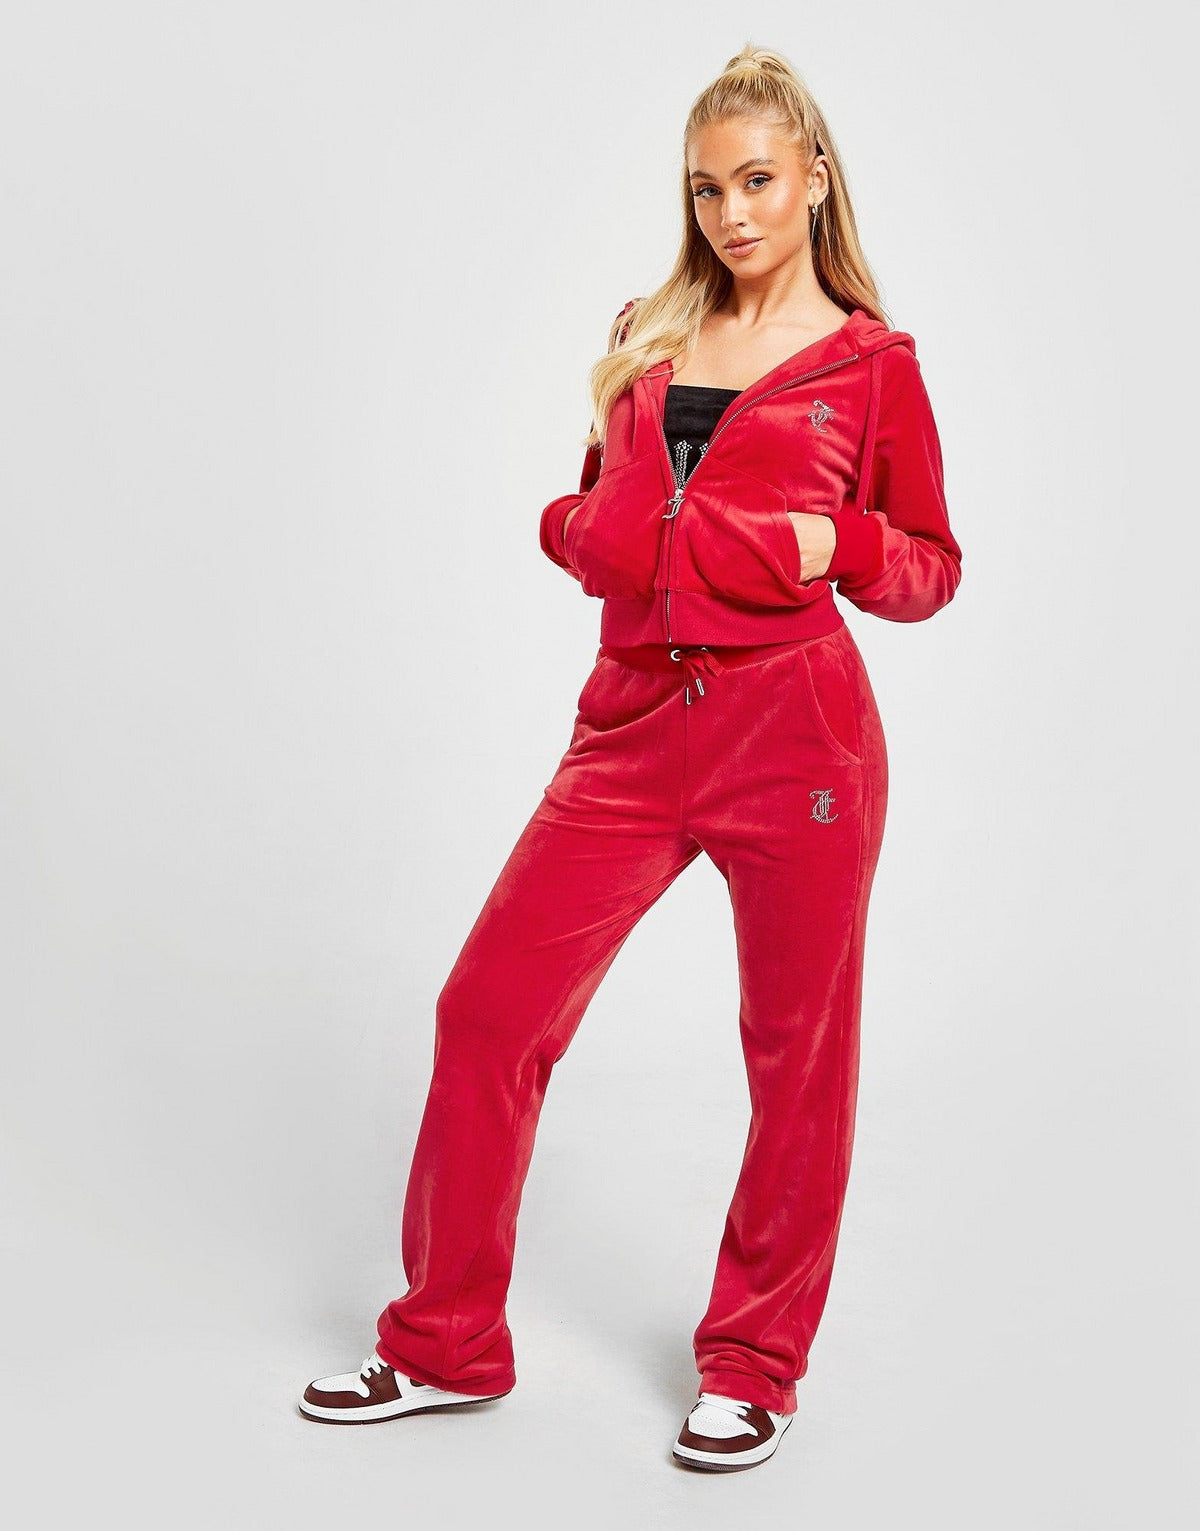 Juicy Couture Red Velour Pajama Loungewear Sleepwear India